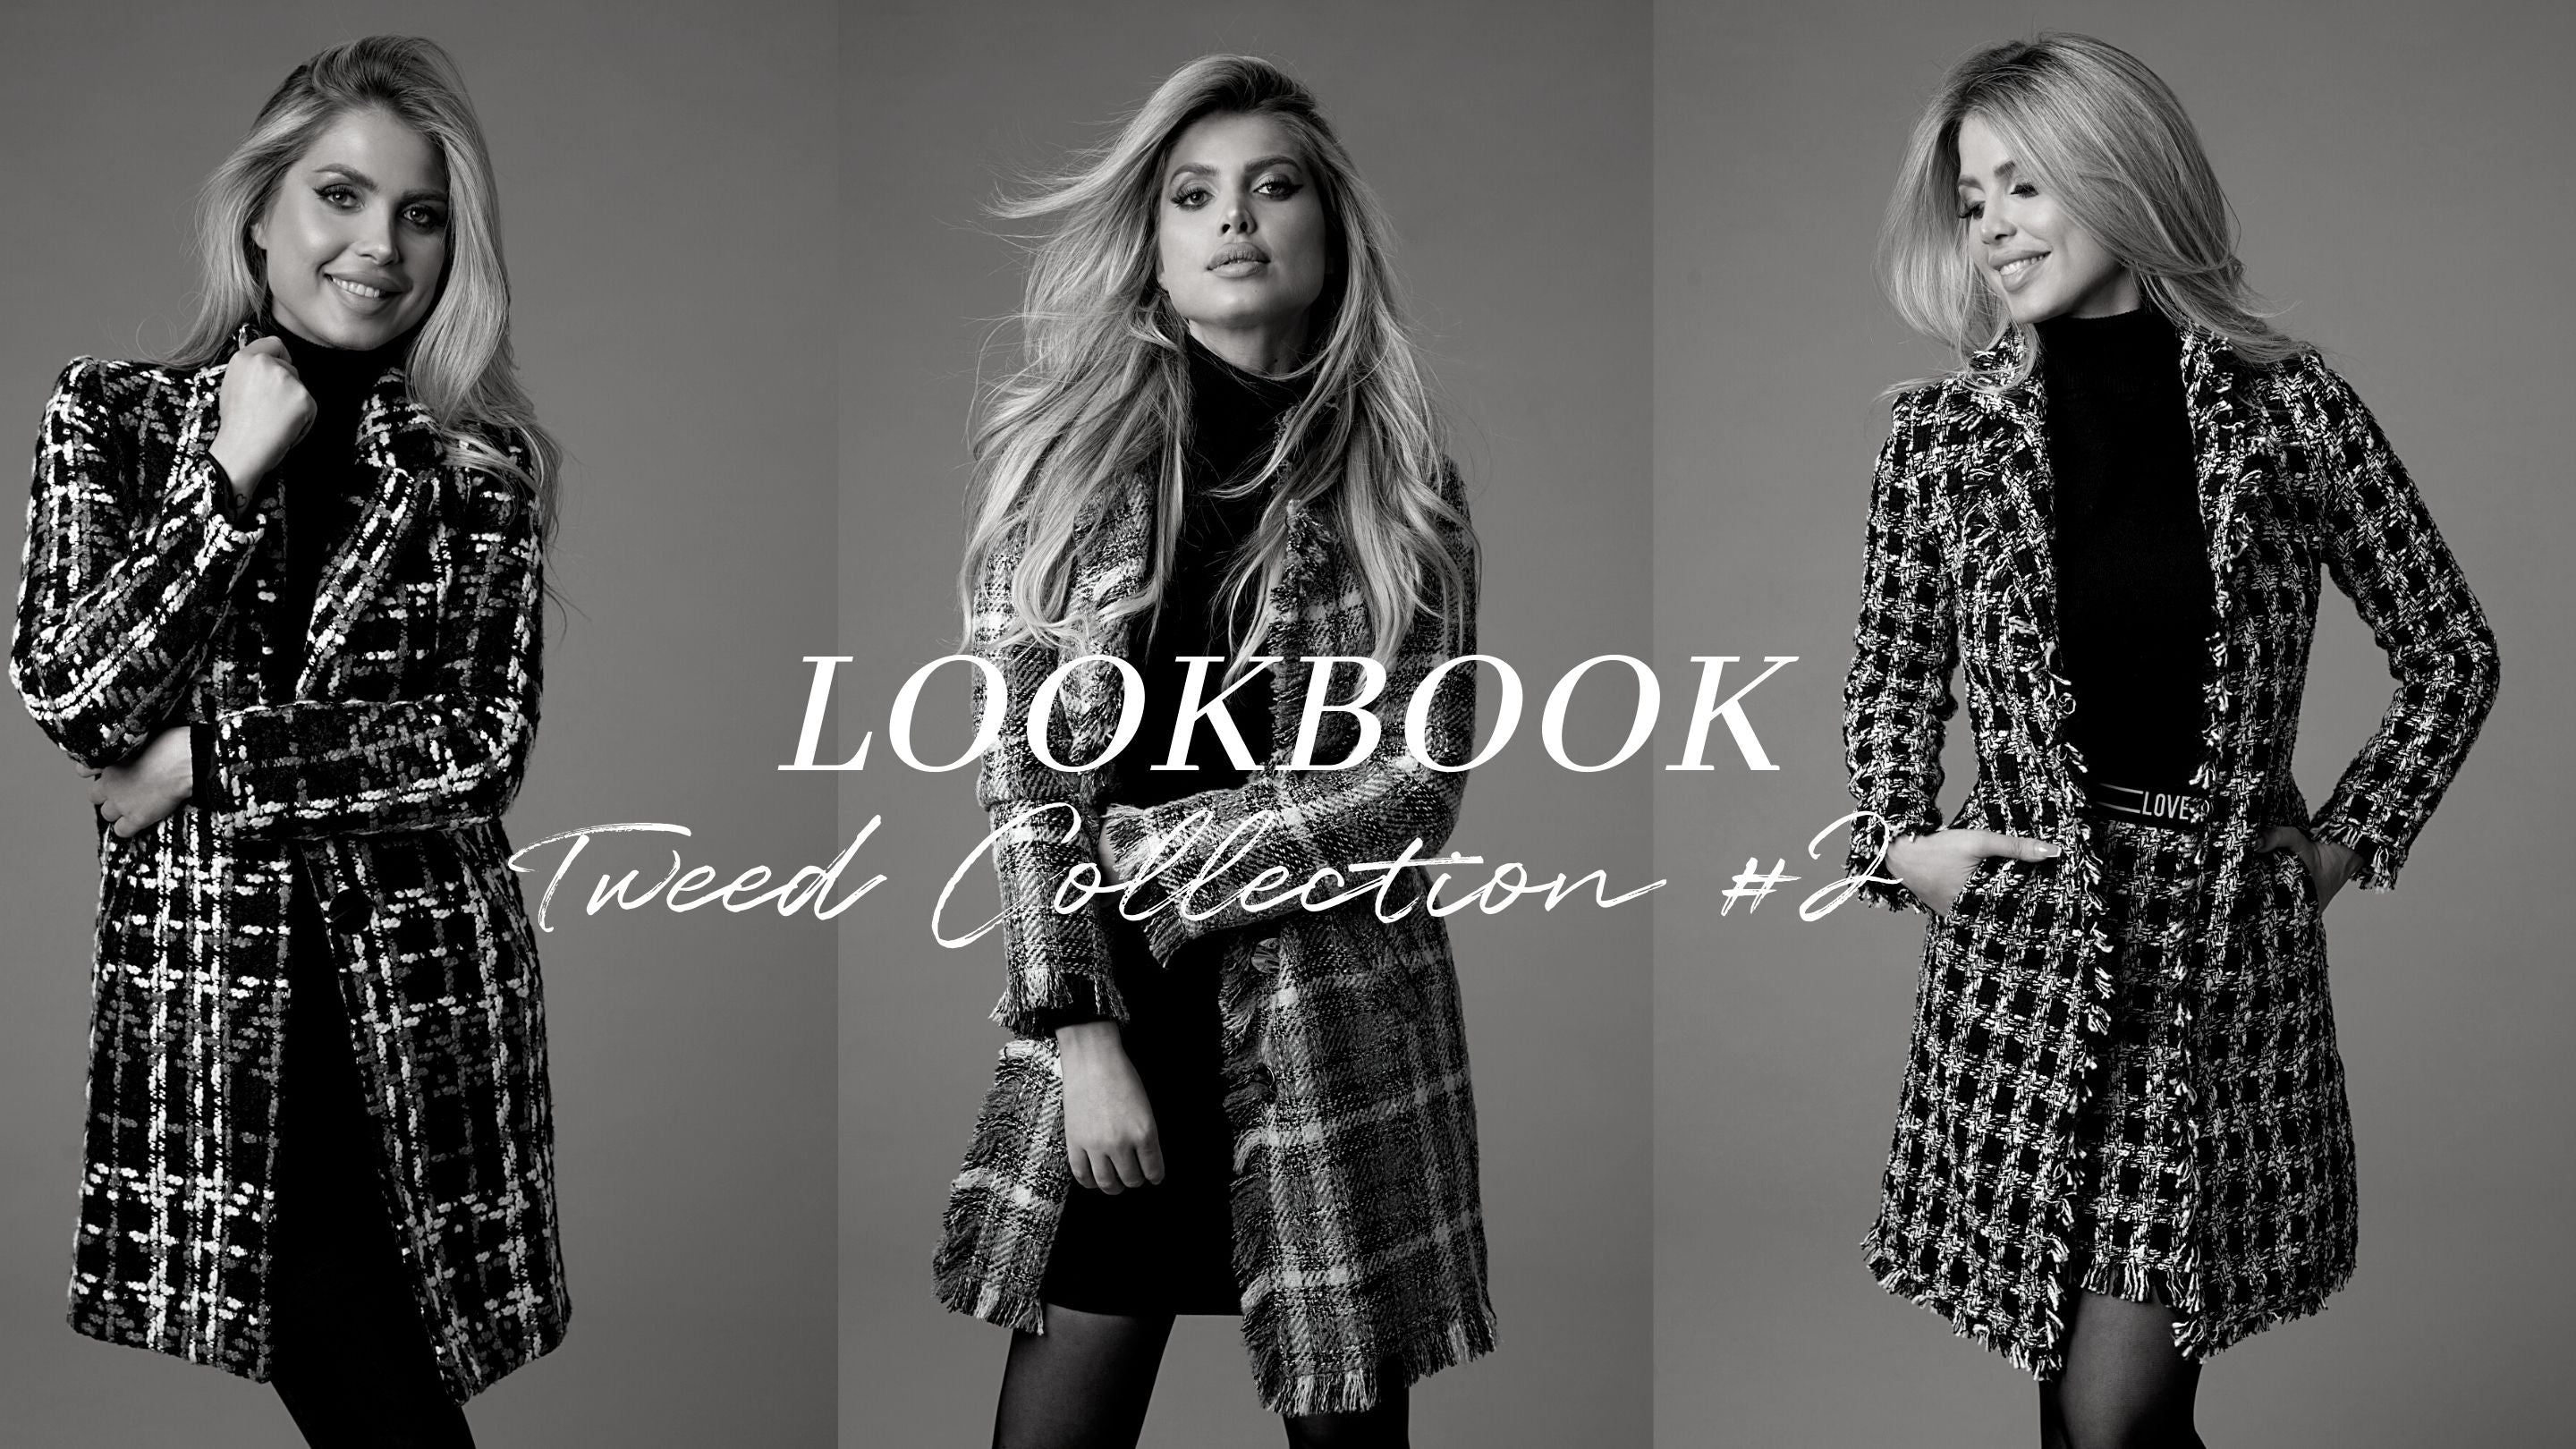 Lookbook Tweed Collection #2